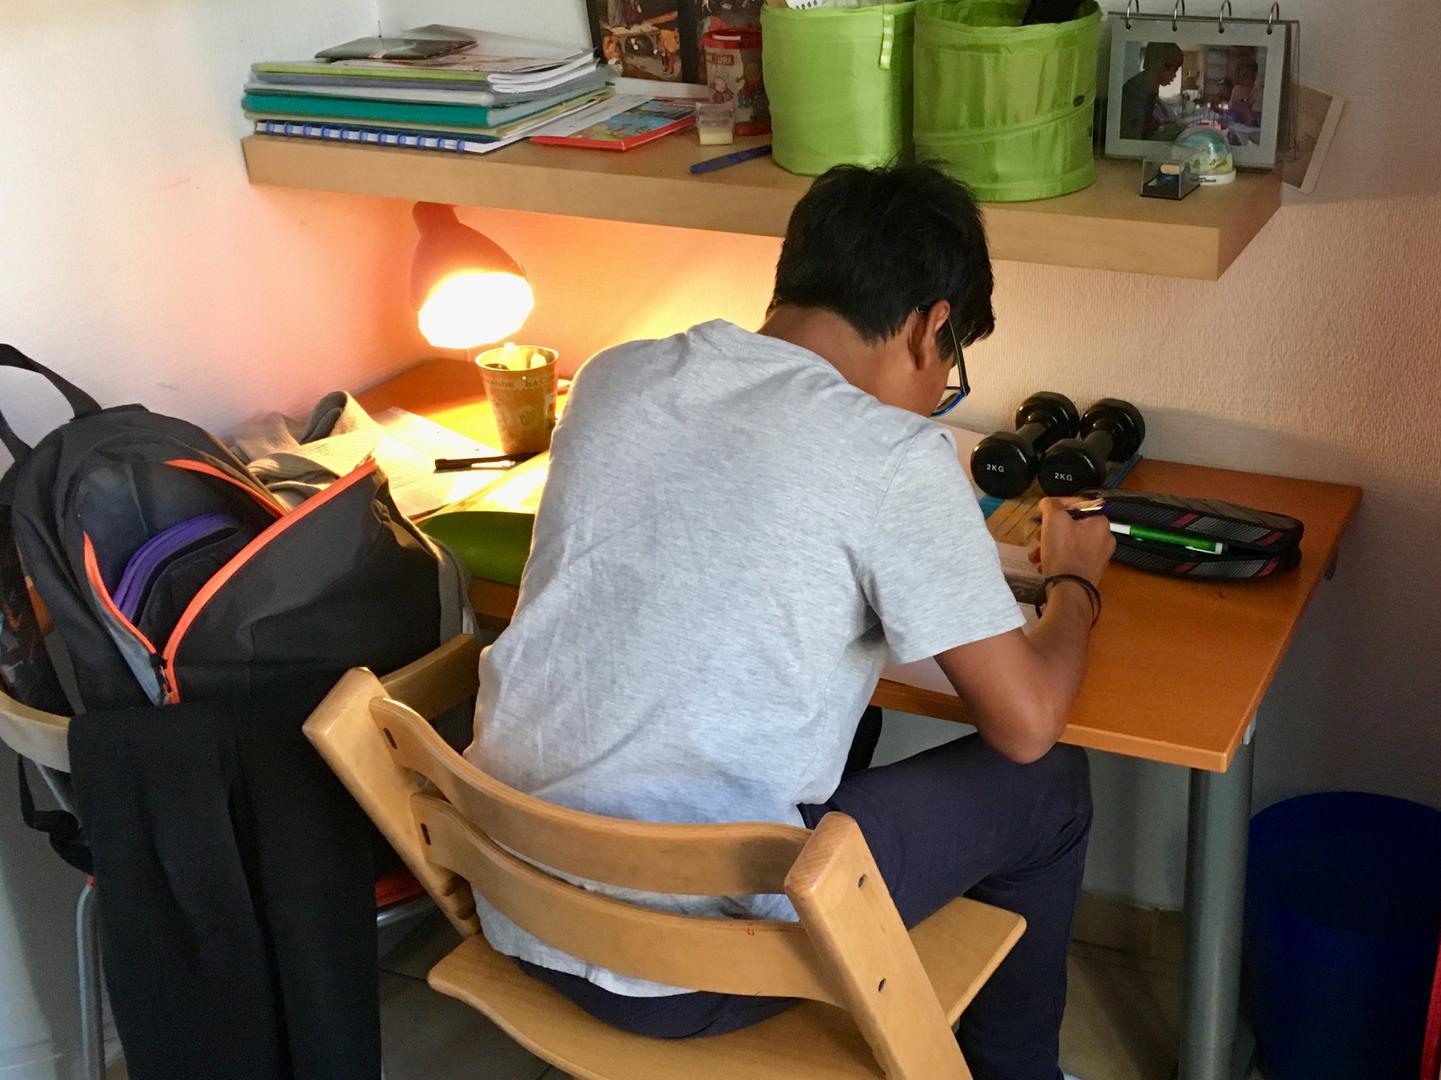 Boy sitting at a desk in a room